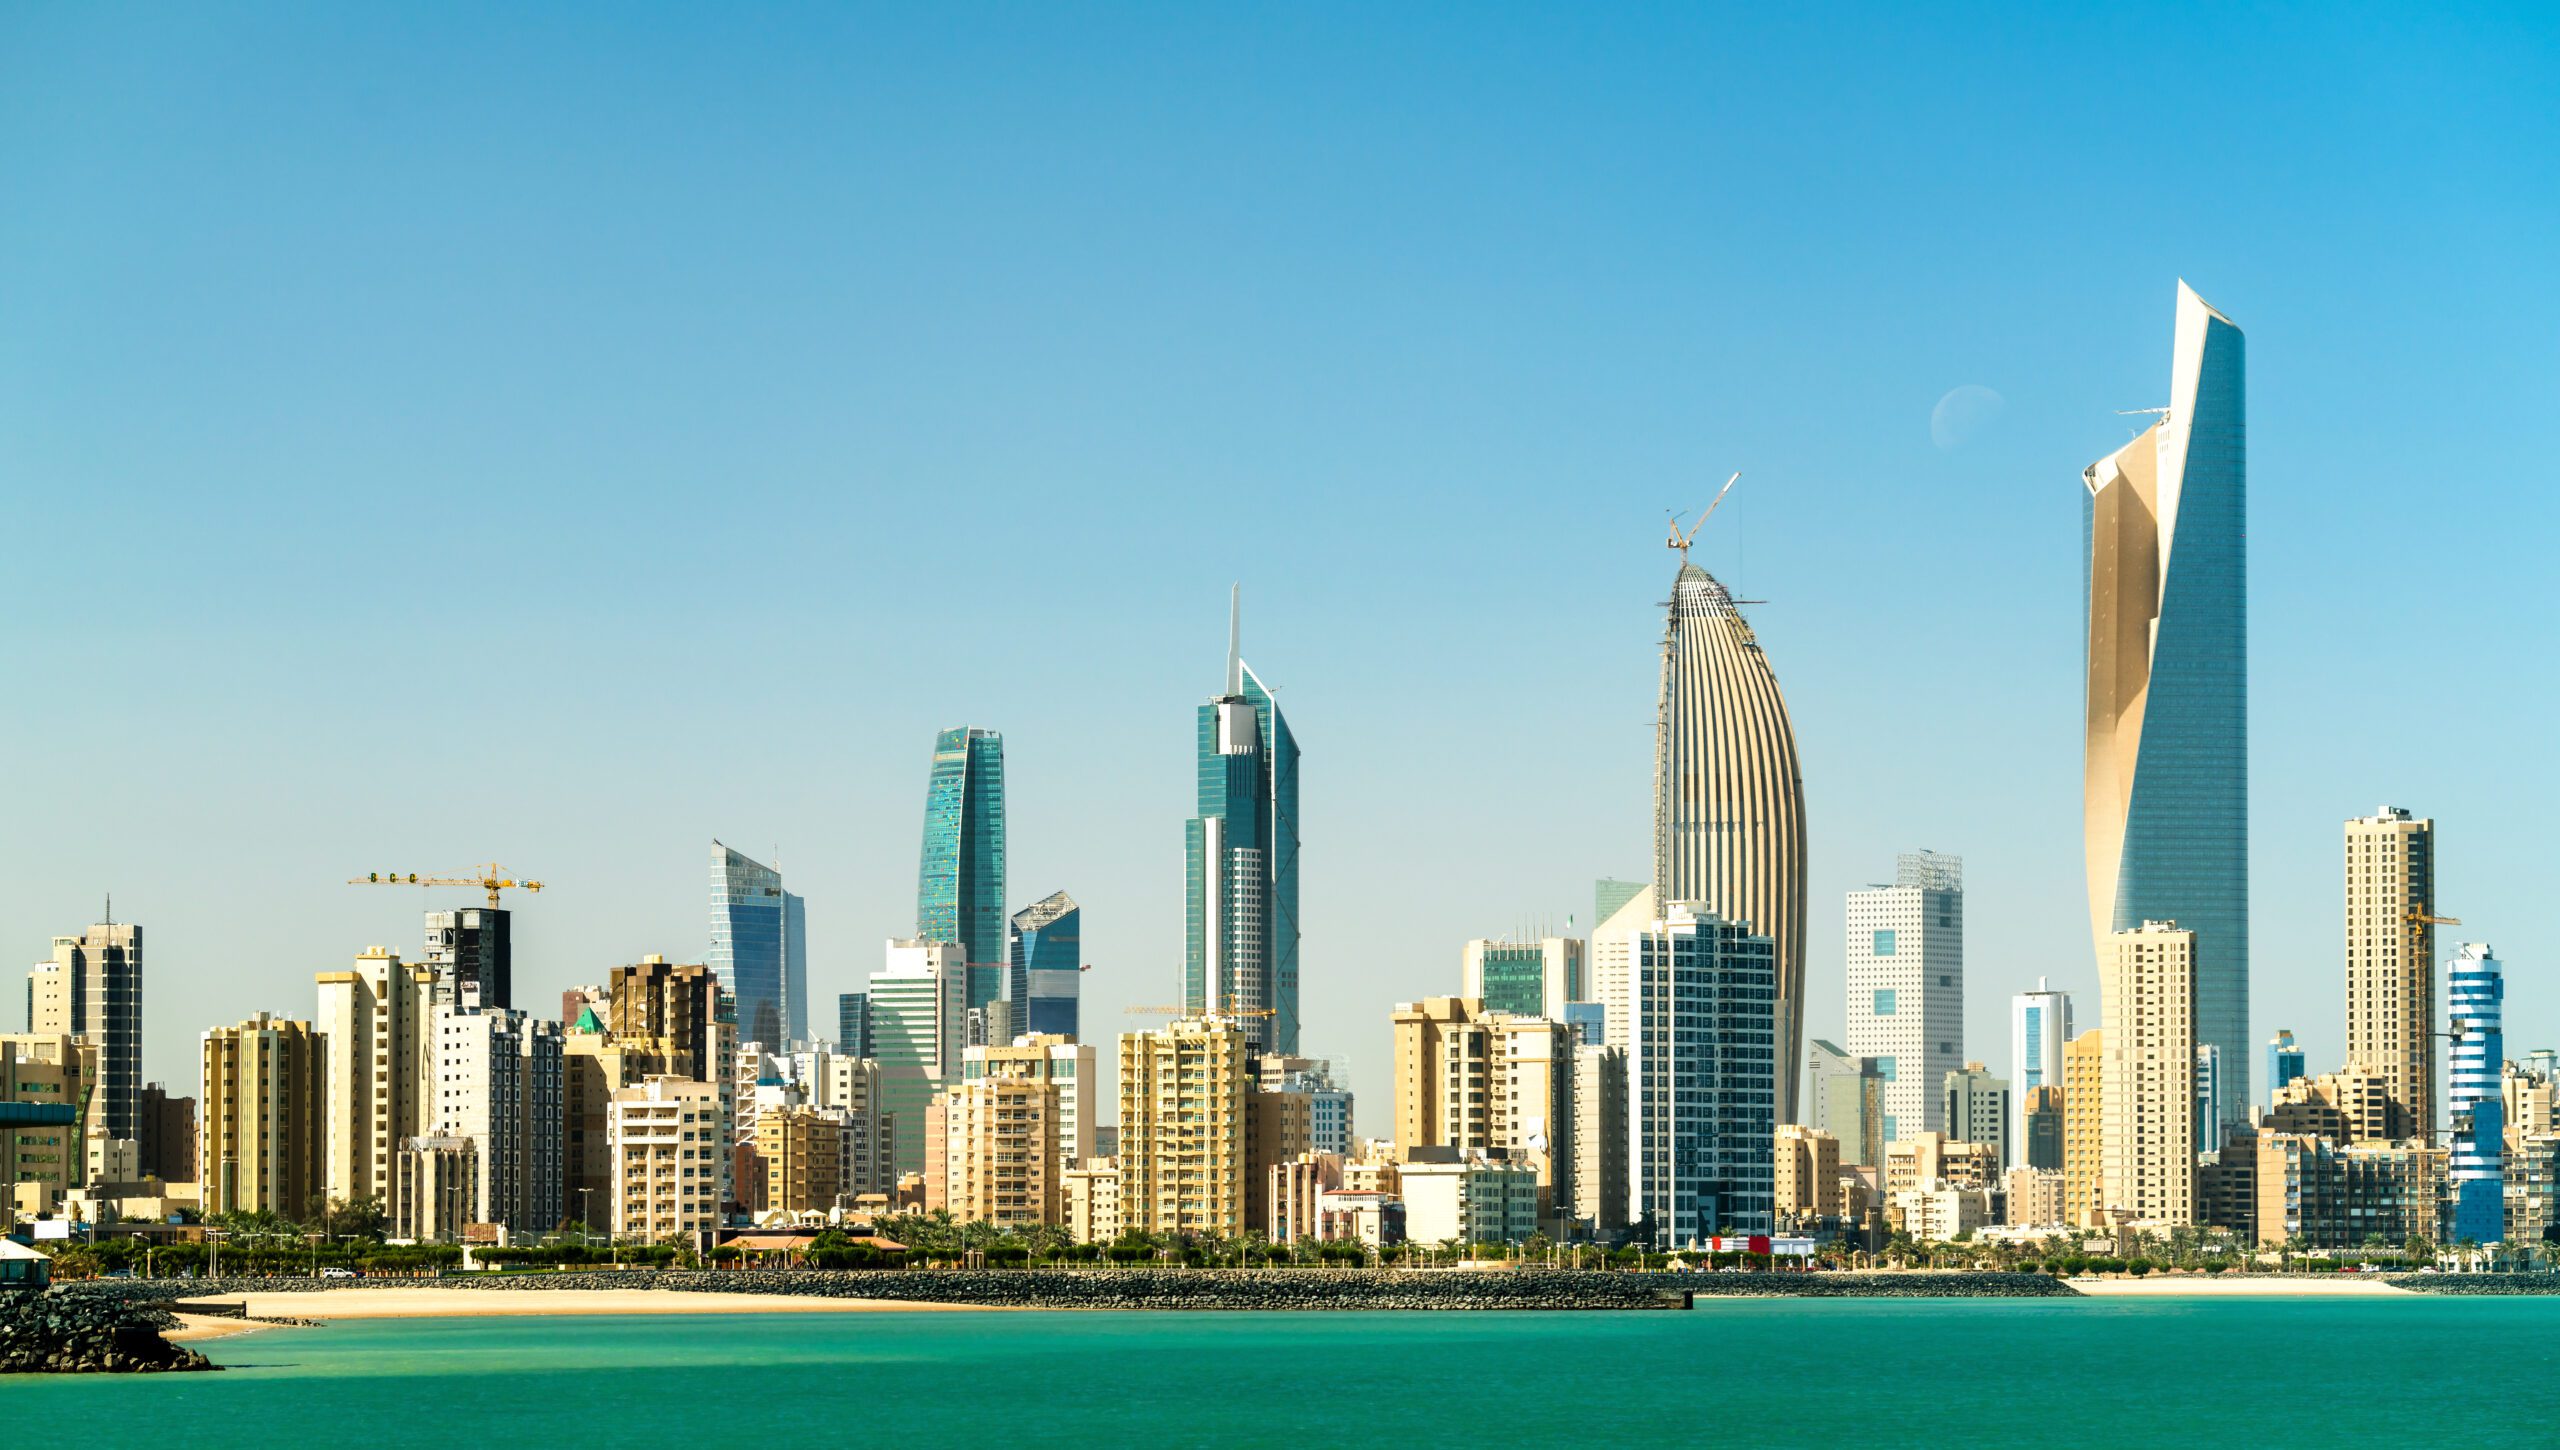 Panorama of Kuwait City in the Persian Gulf